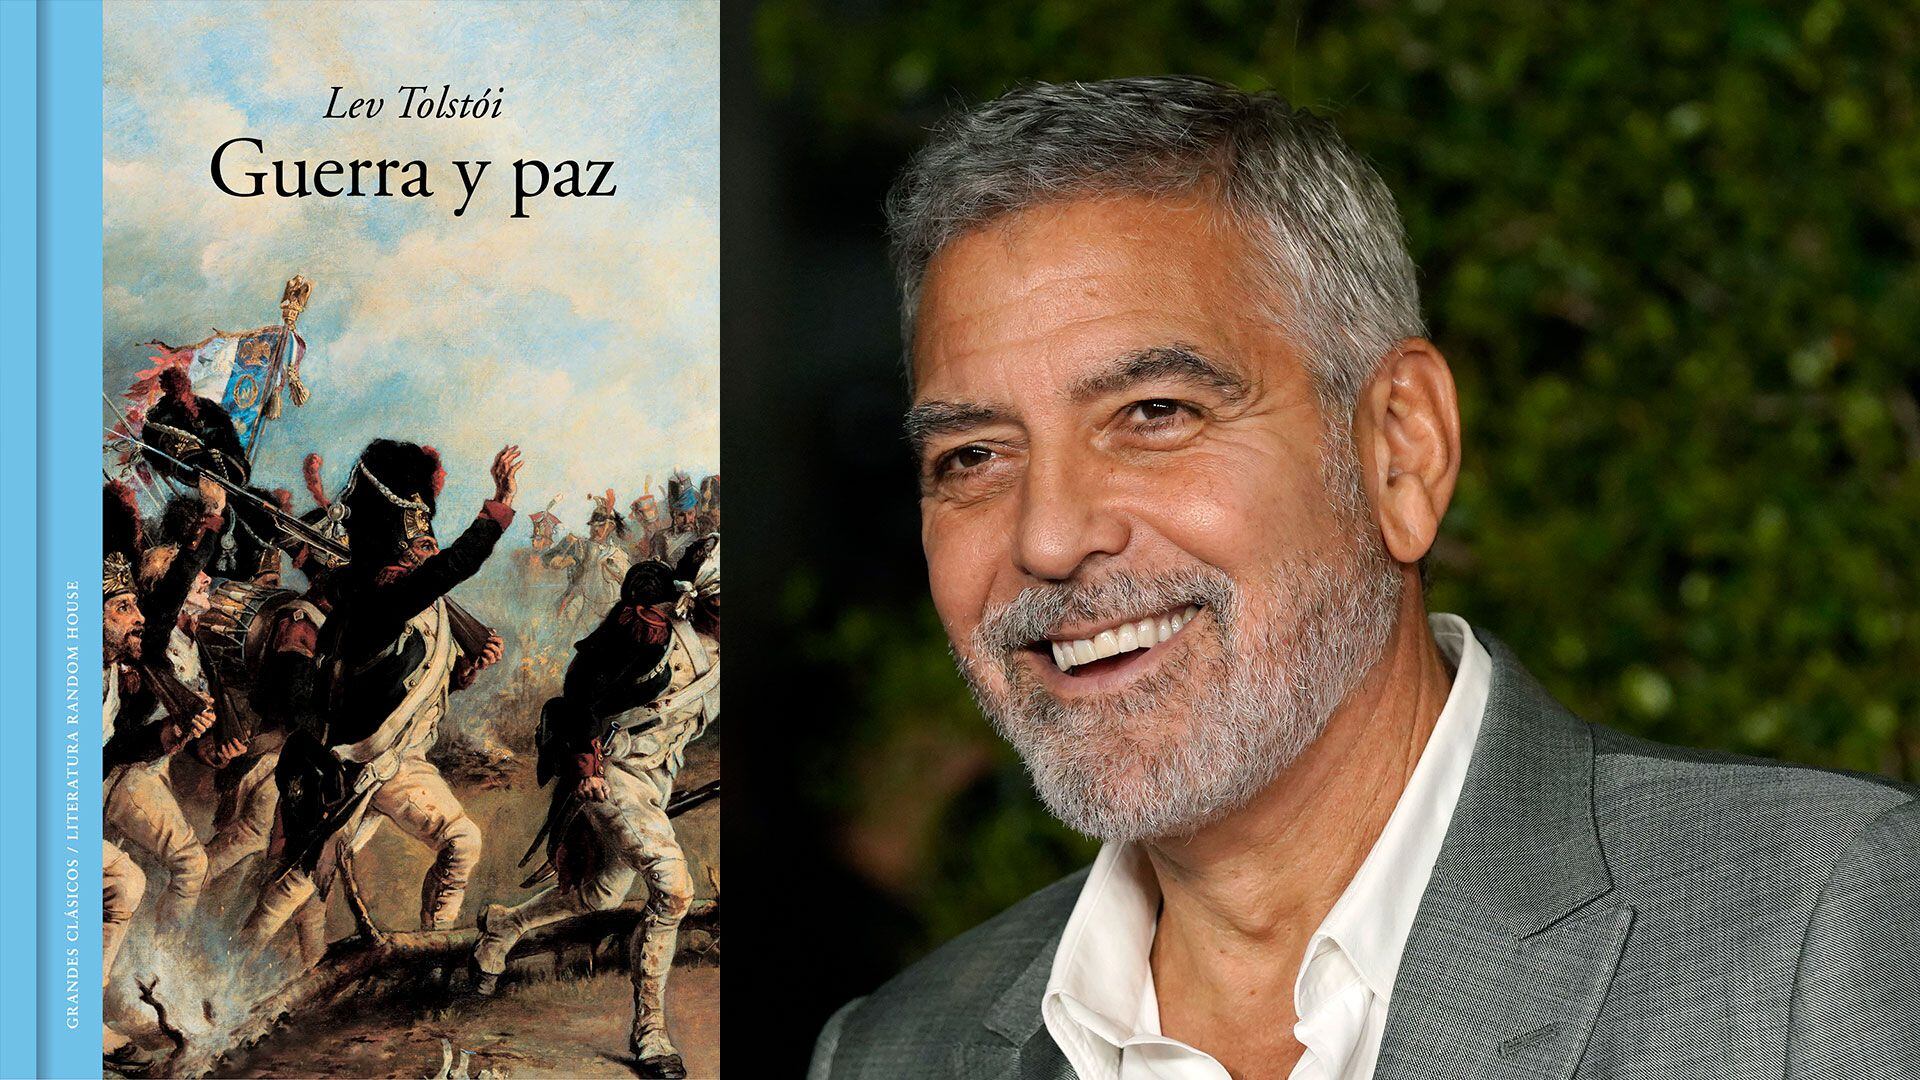 George Clooney - “Guerra y paz” (Lev Tolstói)